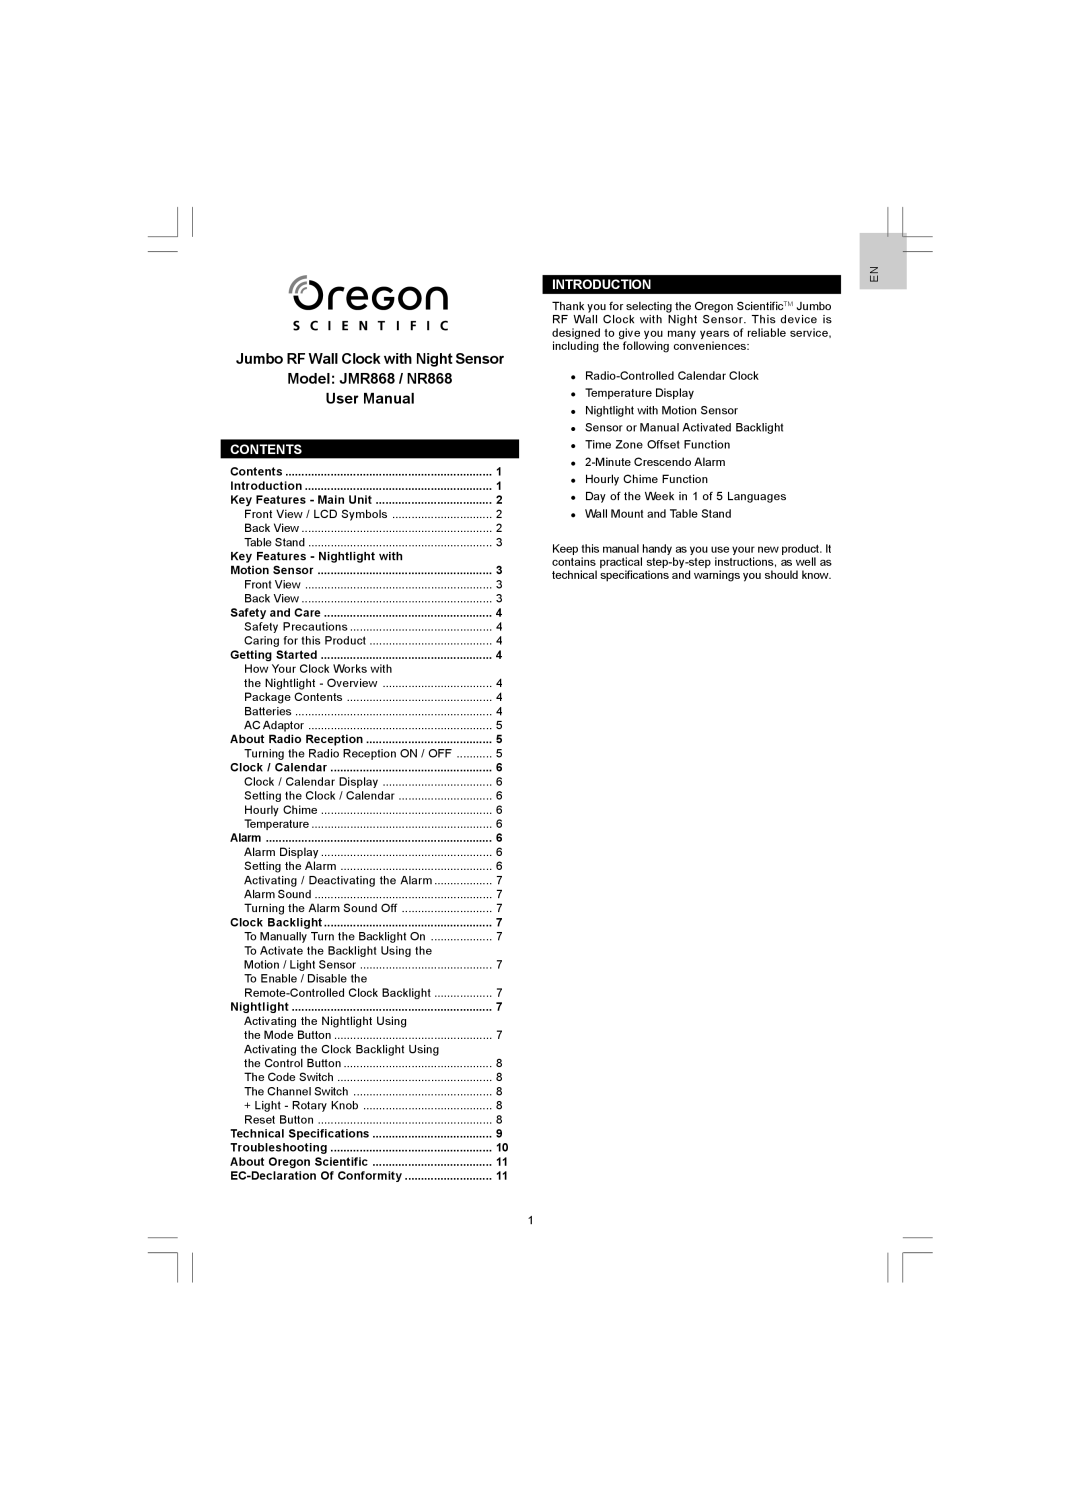 Oregon Scientific user manual Contents, Introduction, Jumbo RF Wall Clock with Night Sensor Model JMR868 / NR868 